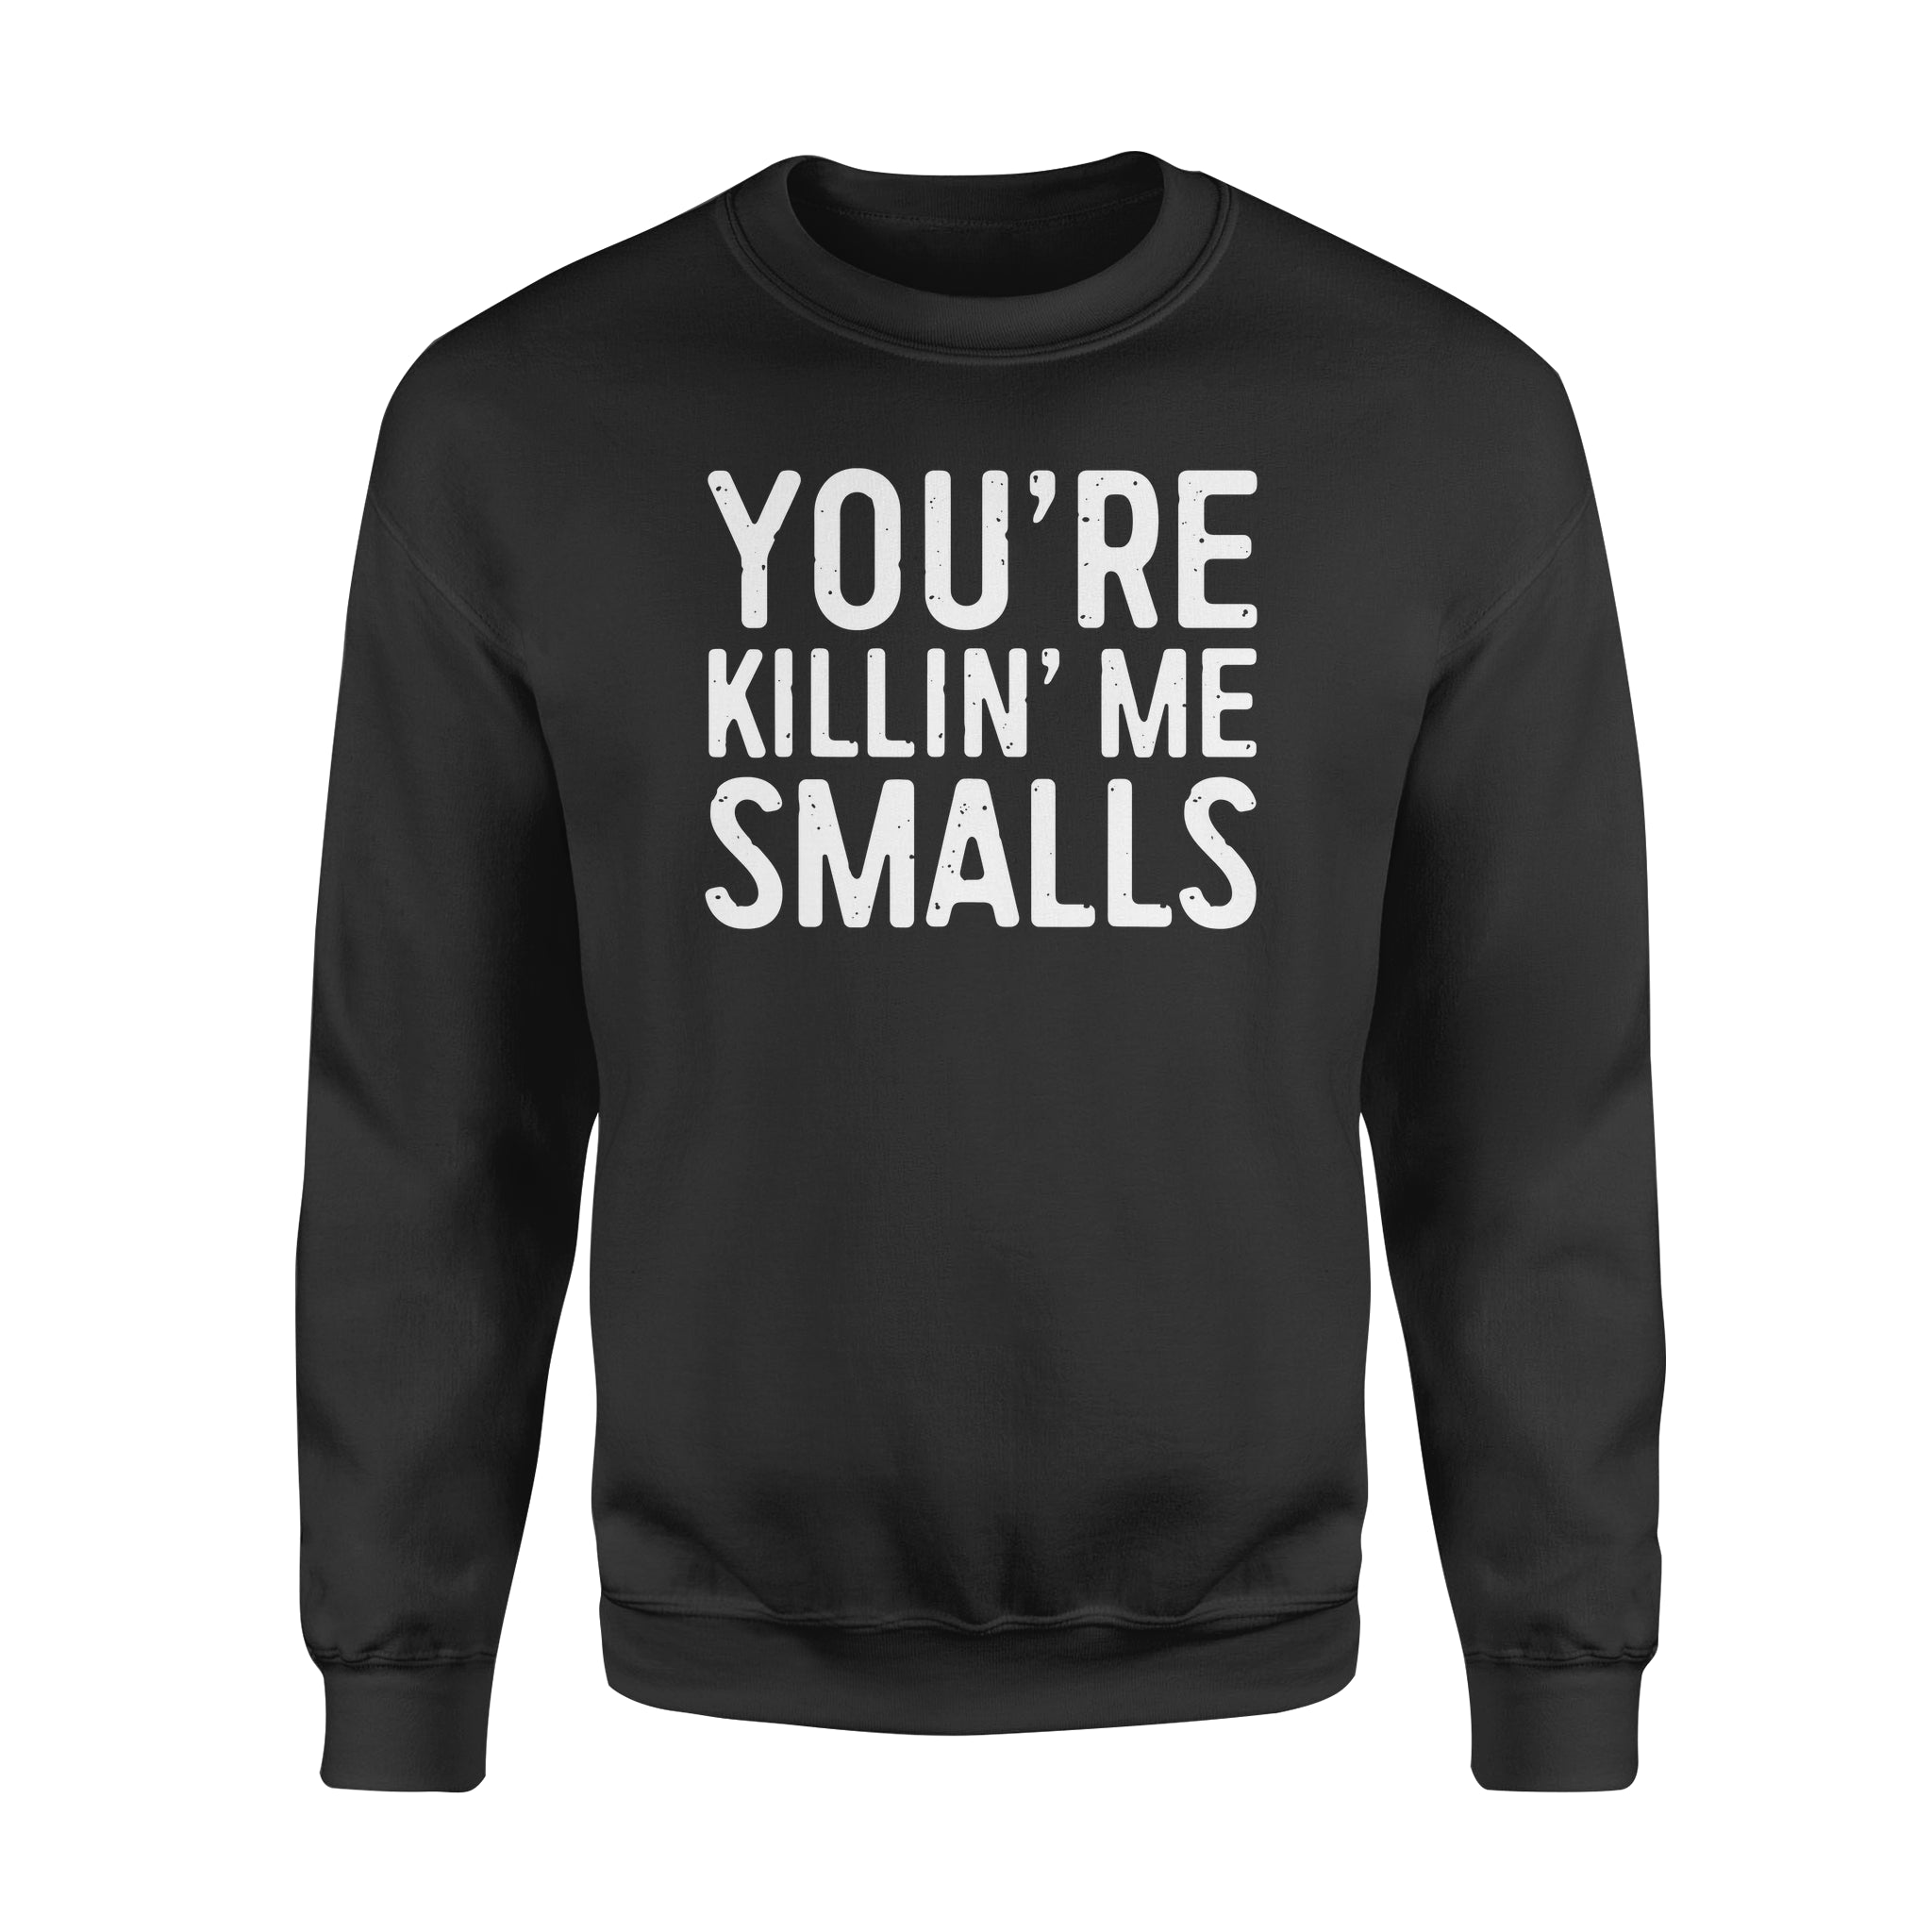 You're Killing Me Smalls T-Shirt Baseball Gift - Standard Crew Neck Sweatshirt